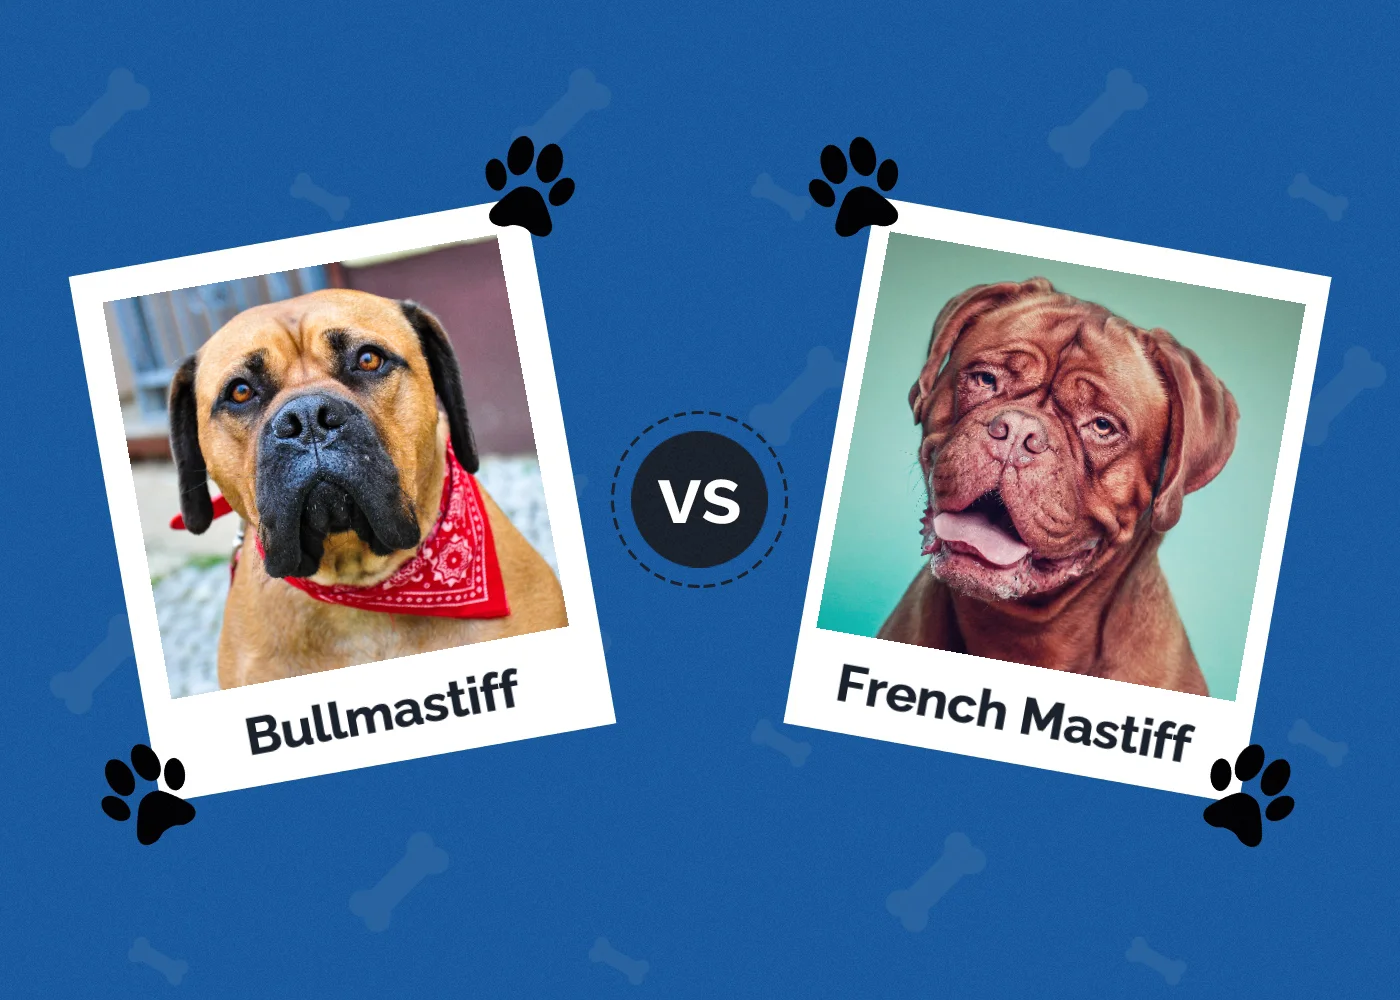 Bullmastiff vs French Mastiff - Featured Image